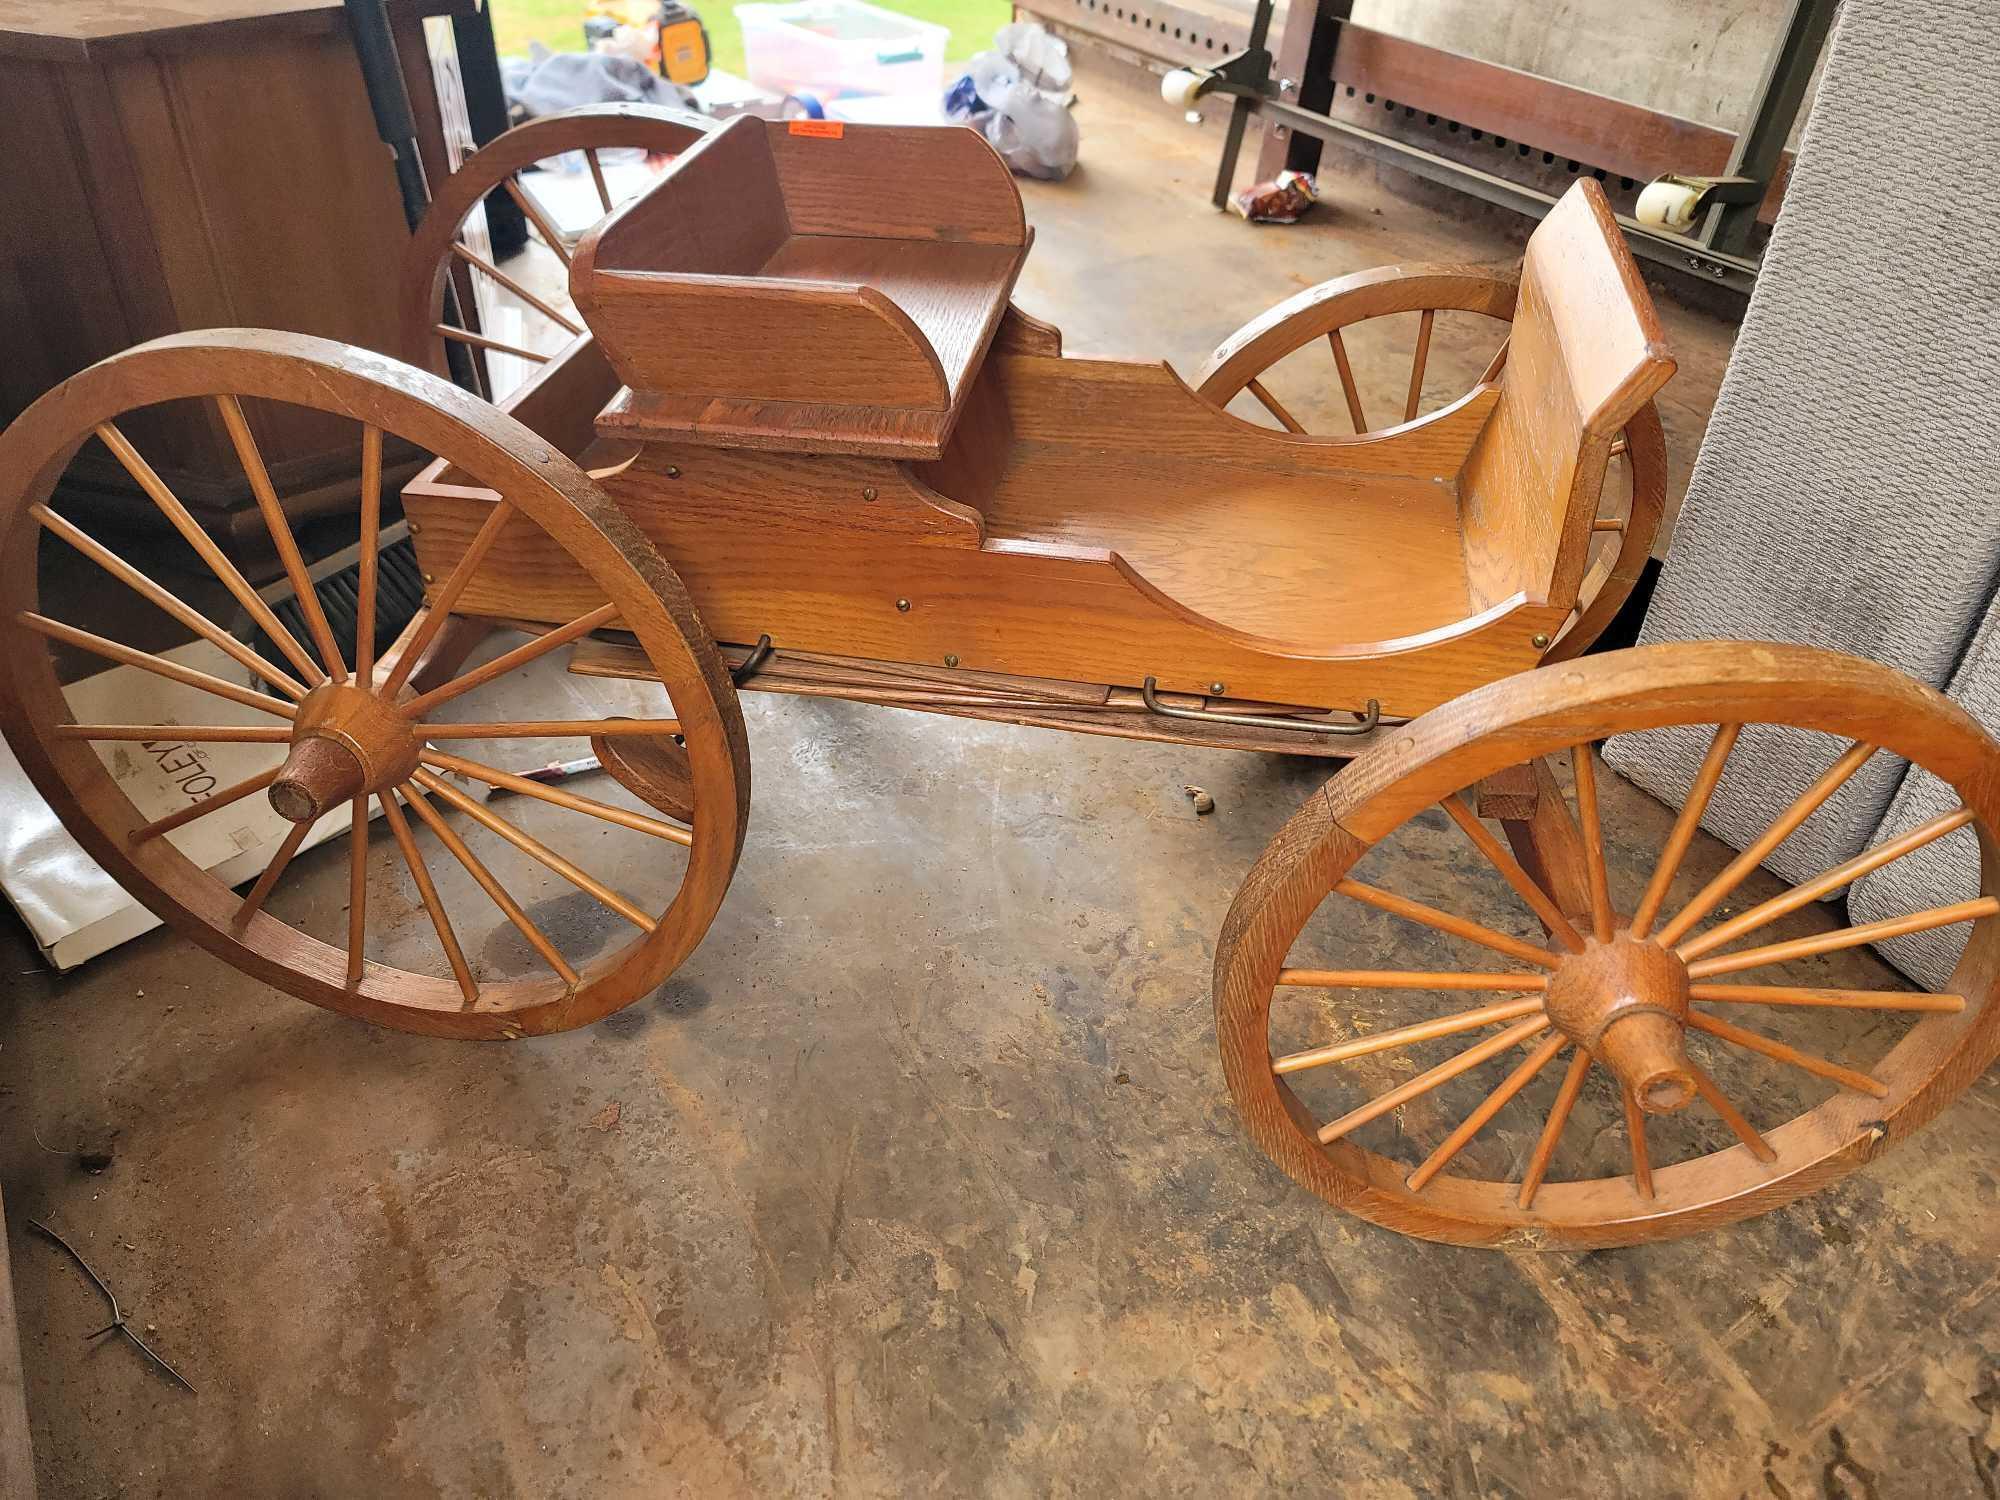 antique wooden wagon